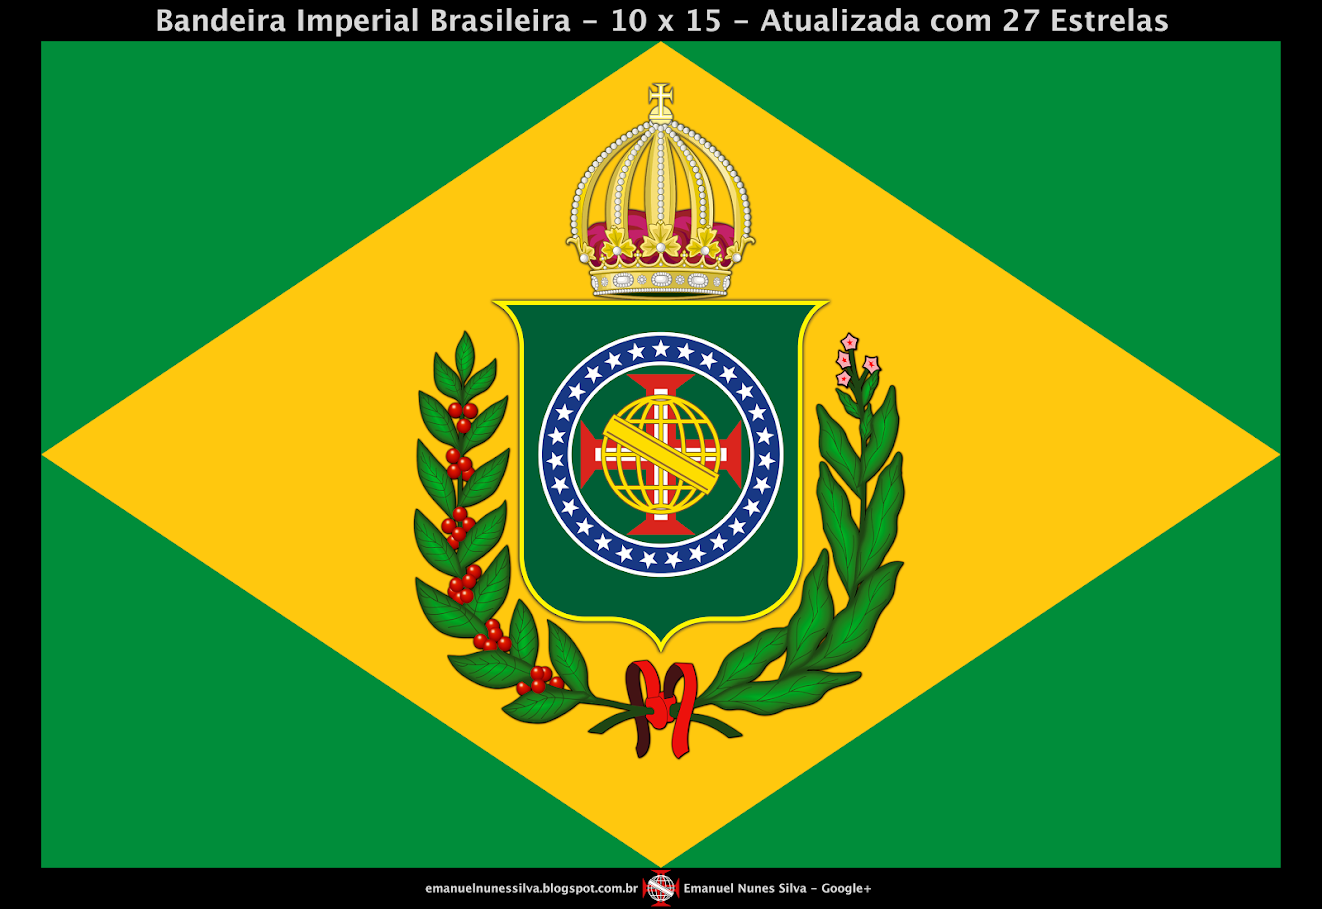 Bandeira do Brasil Imperial - Modelo (10 X 15) - Atualizada - Crédito: Emanuel Nunes Silva